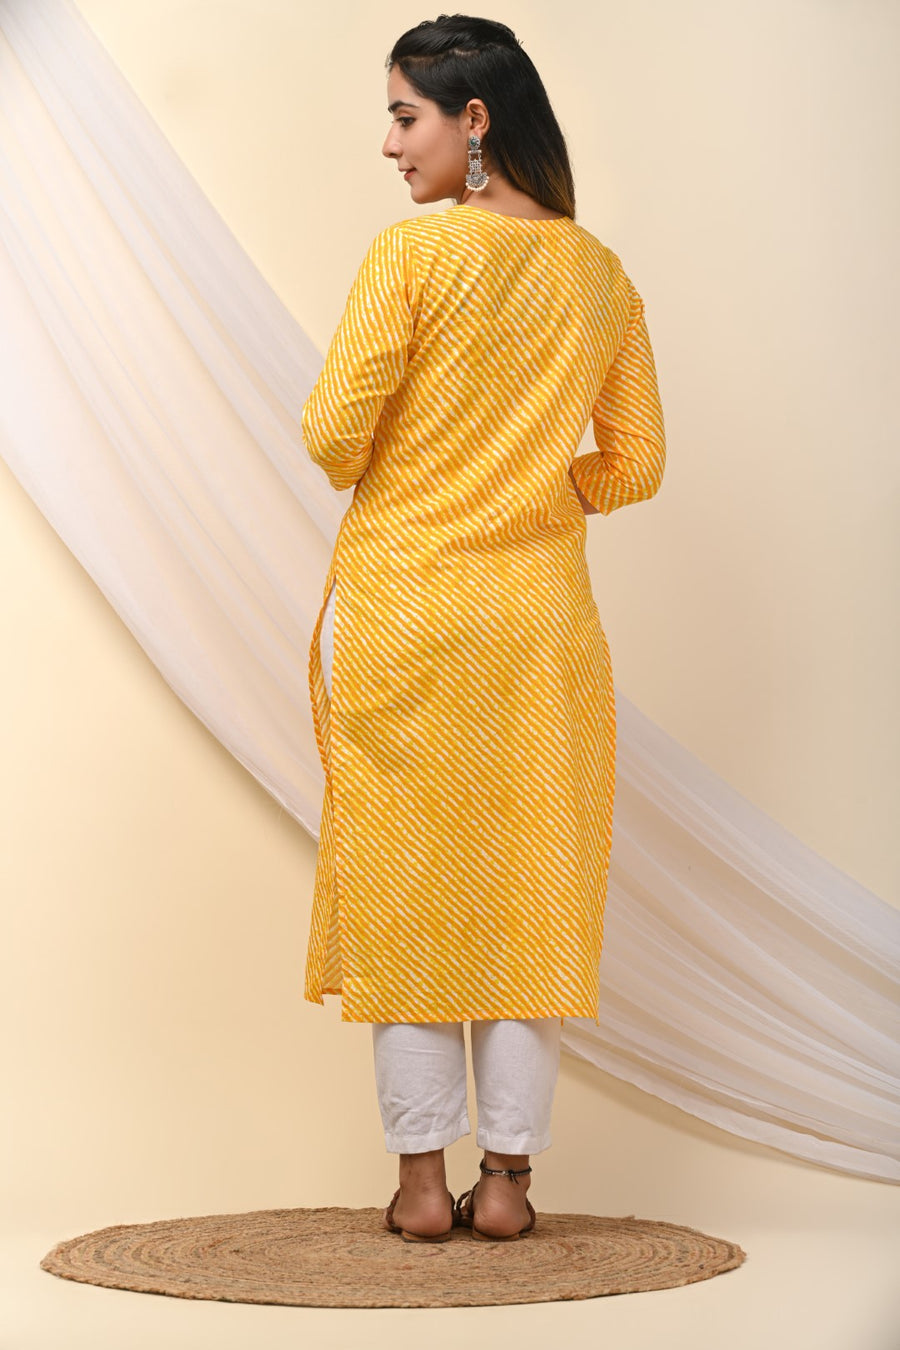 Lahriya Yellow Kurtis: Embrace Tradition with a Modern Twist